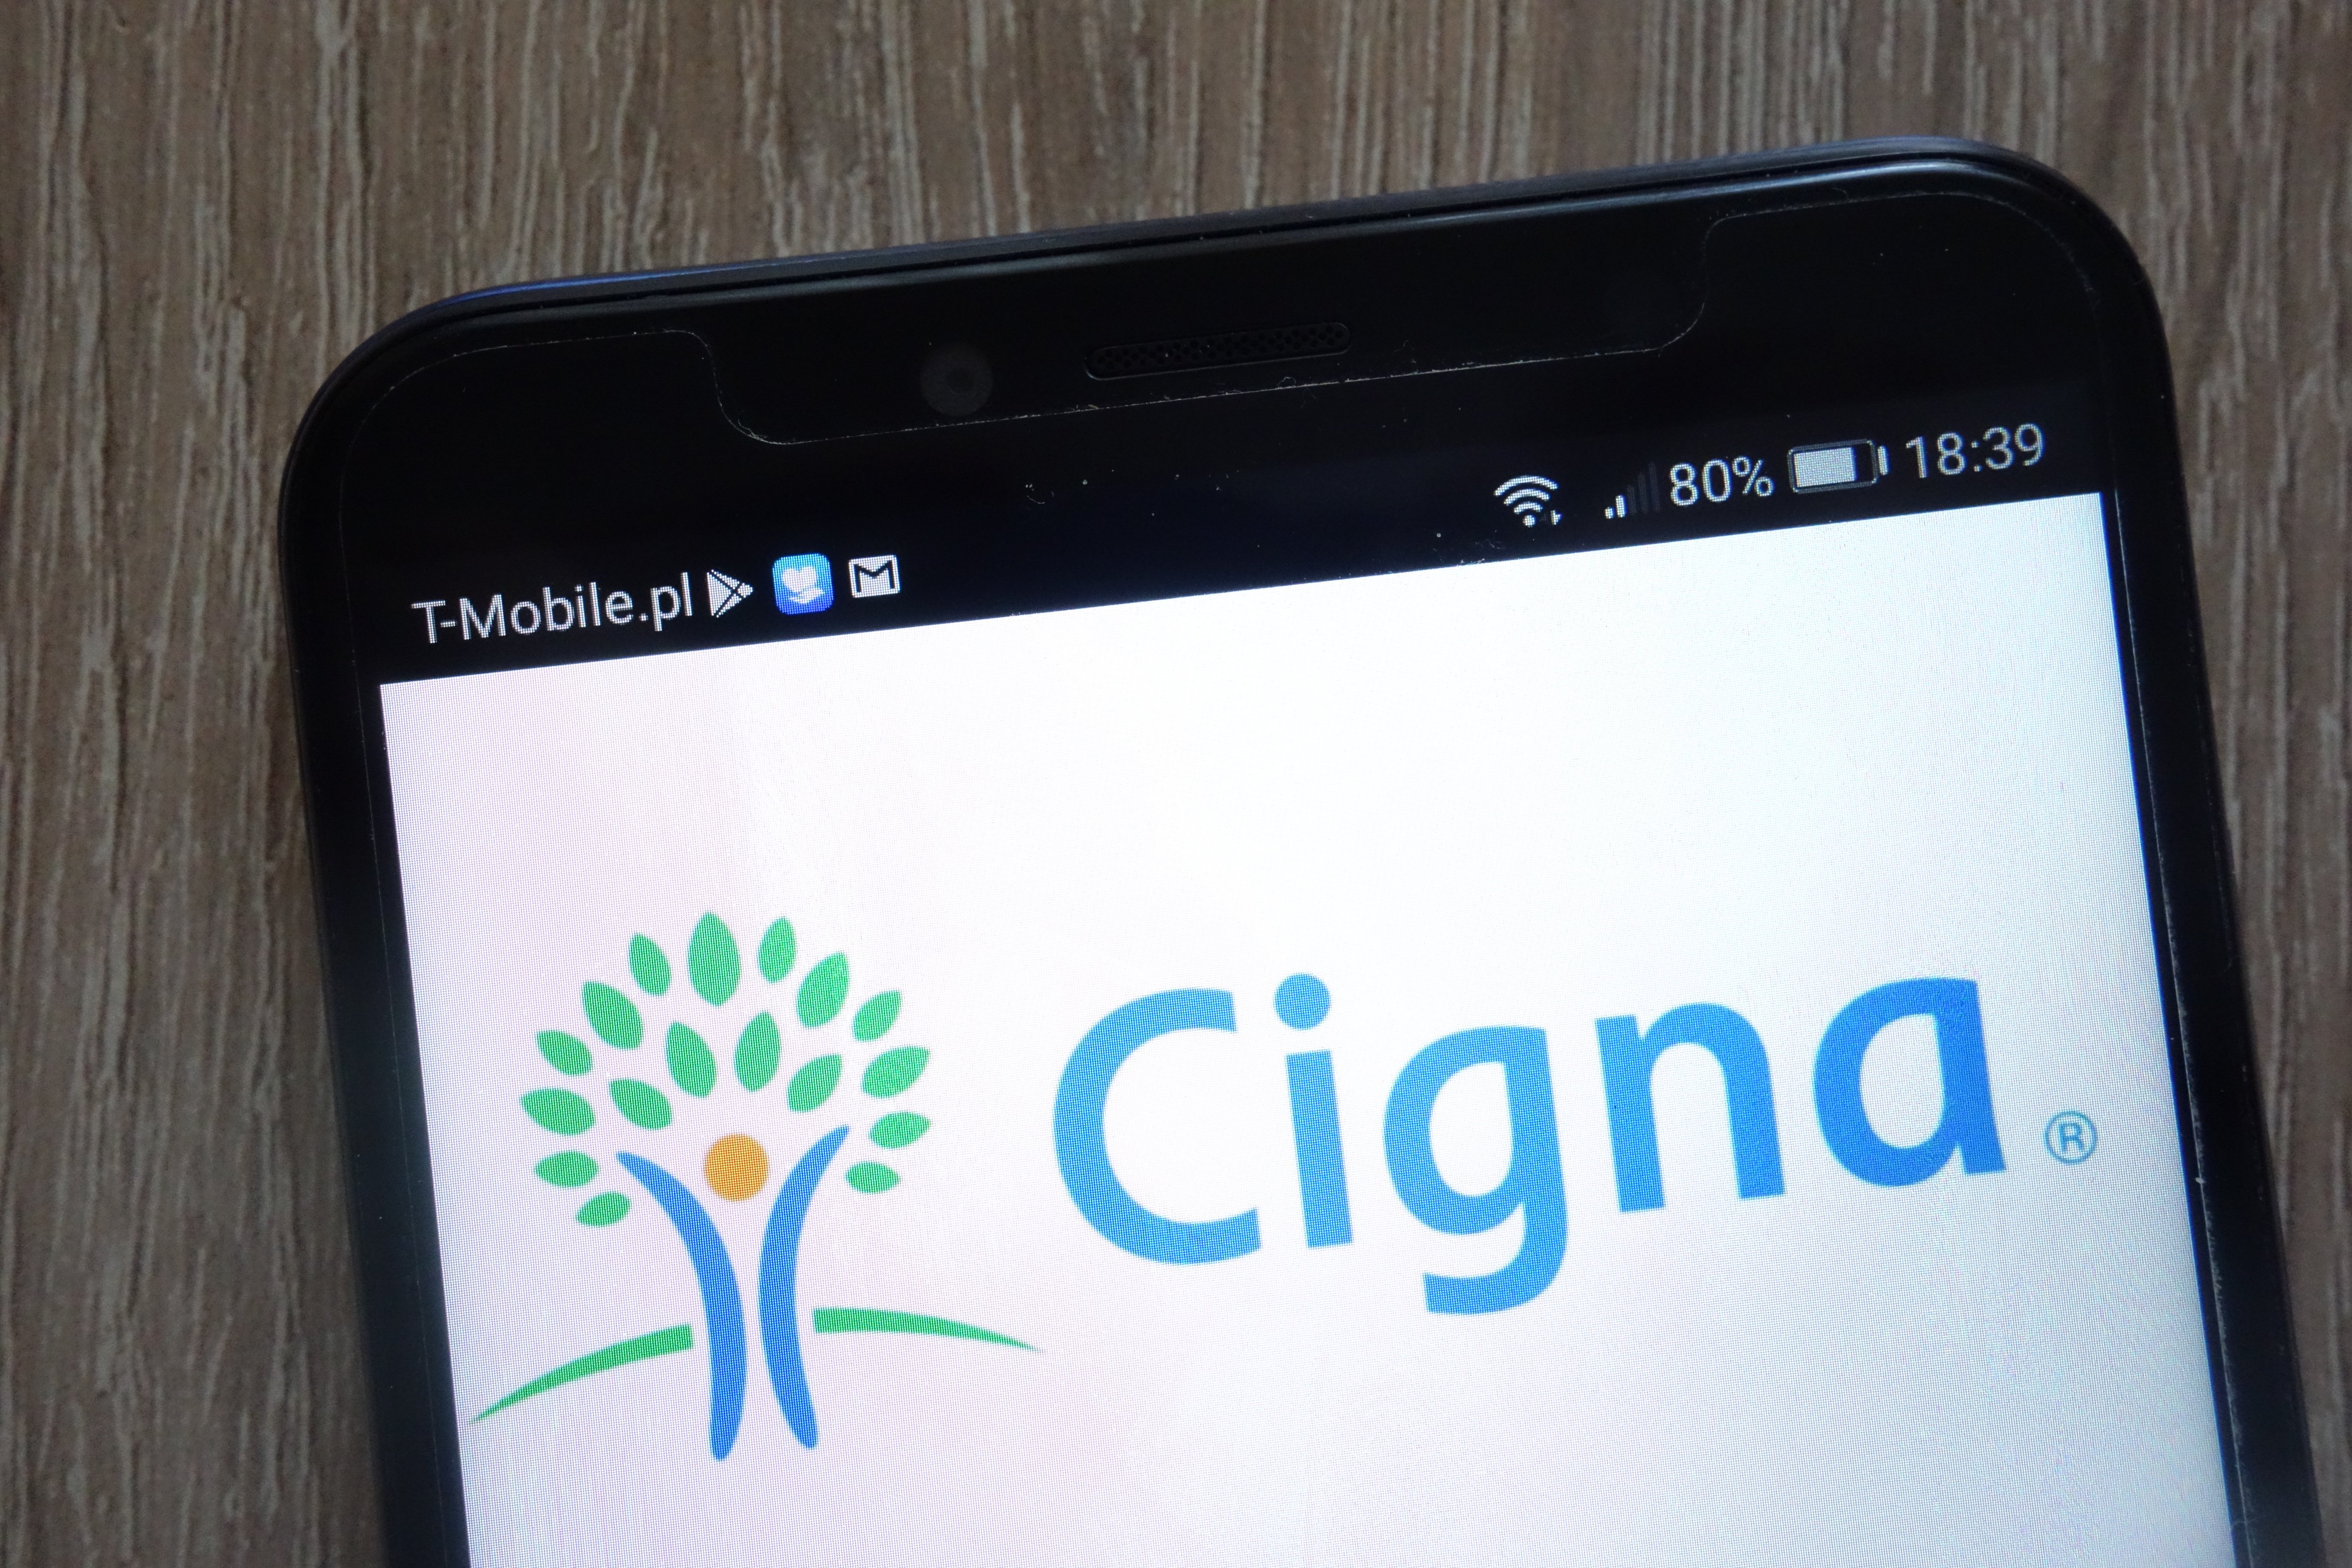 Cignas logo displayed on a smartphone